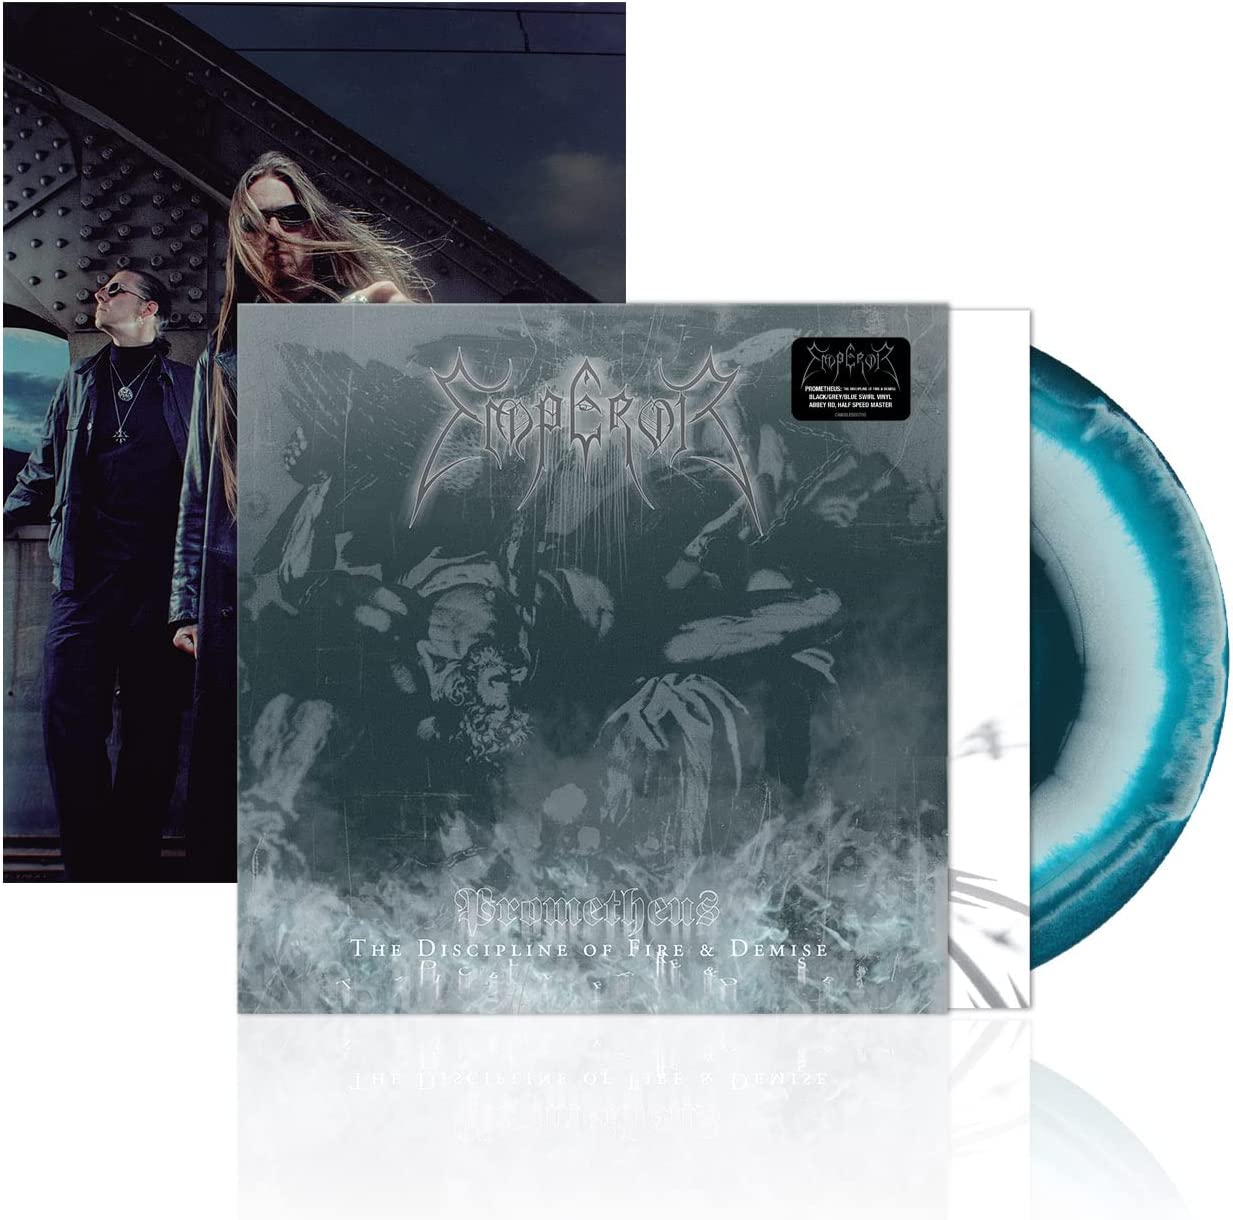 Prometheus: The Discipline Of Fire & Demise (Black/Grey/Blue Swirl Vinyl) | Emperor image